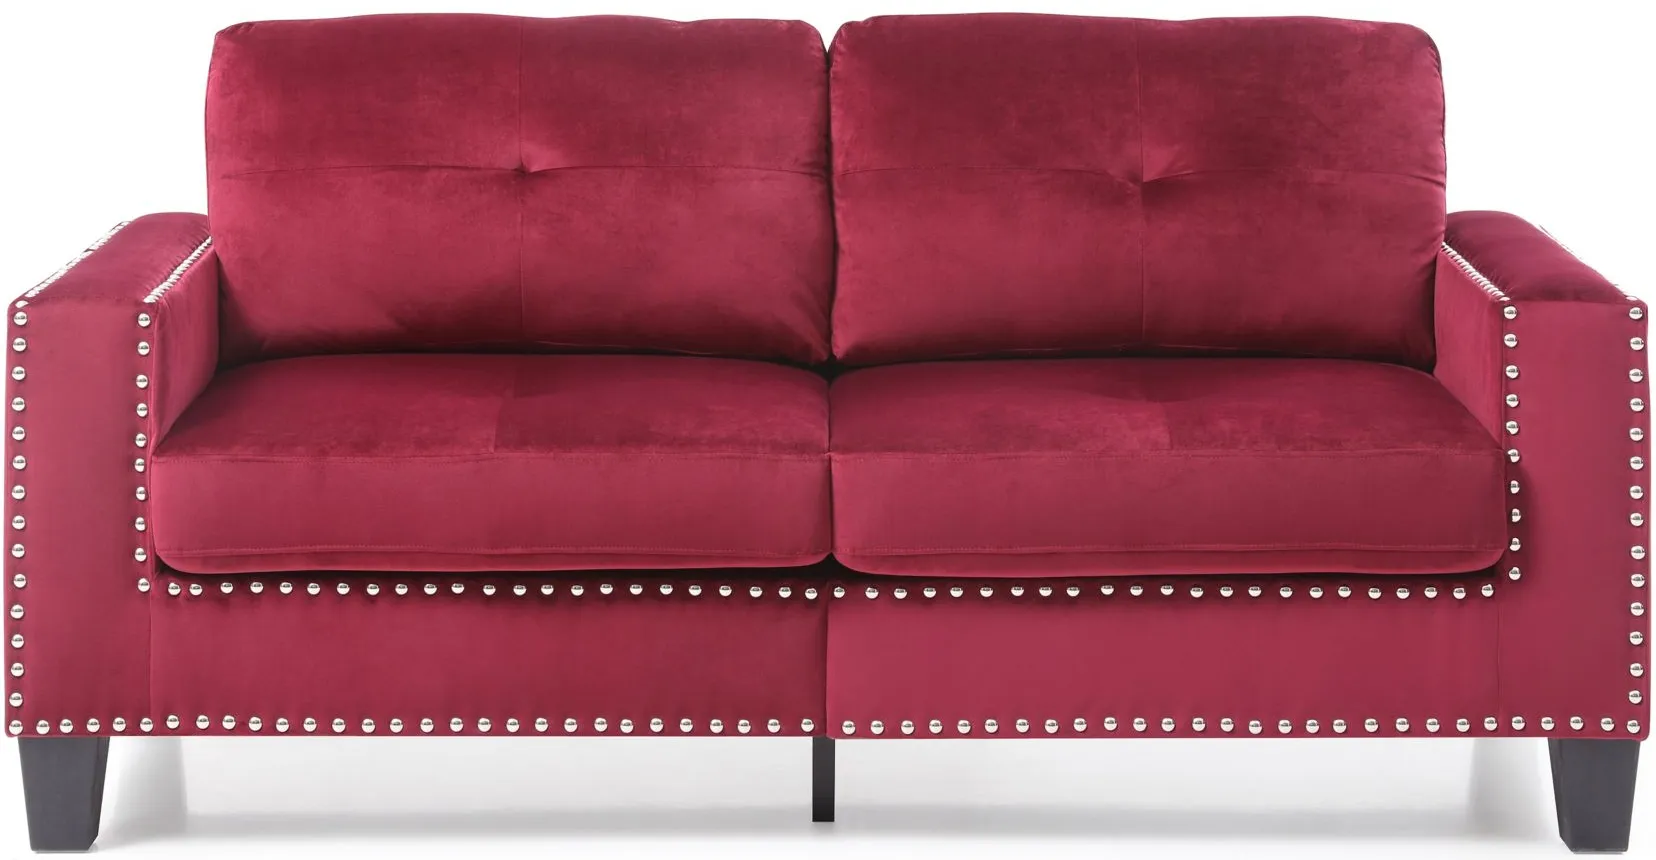 Nailer Sofa in Burgundy by Glory Furniture